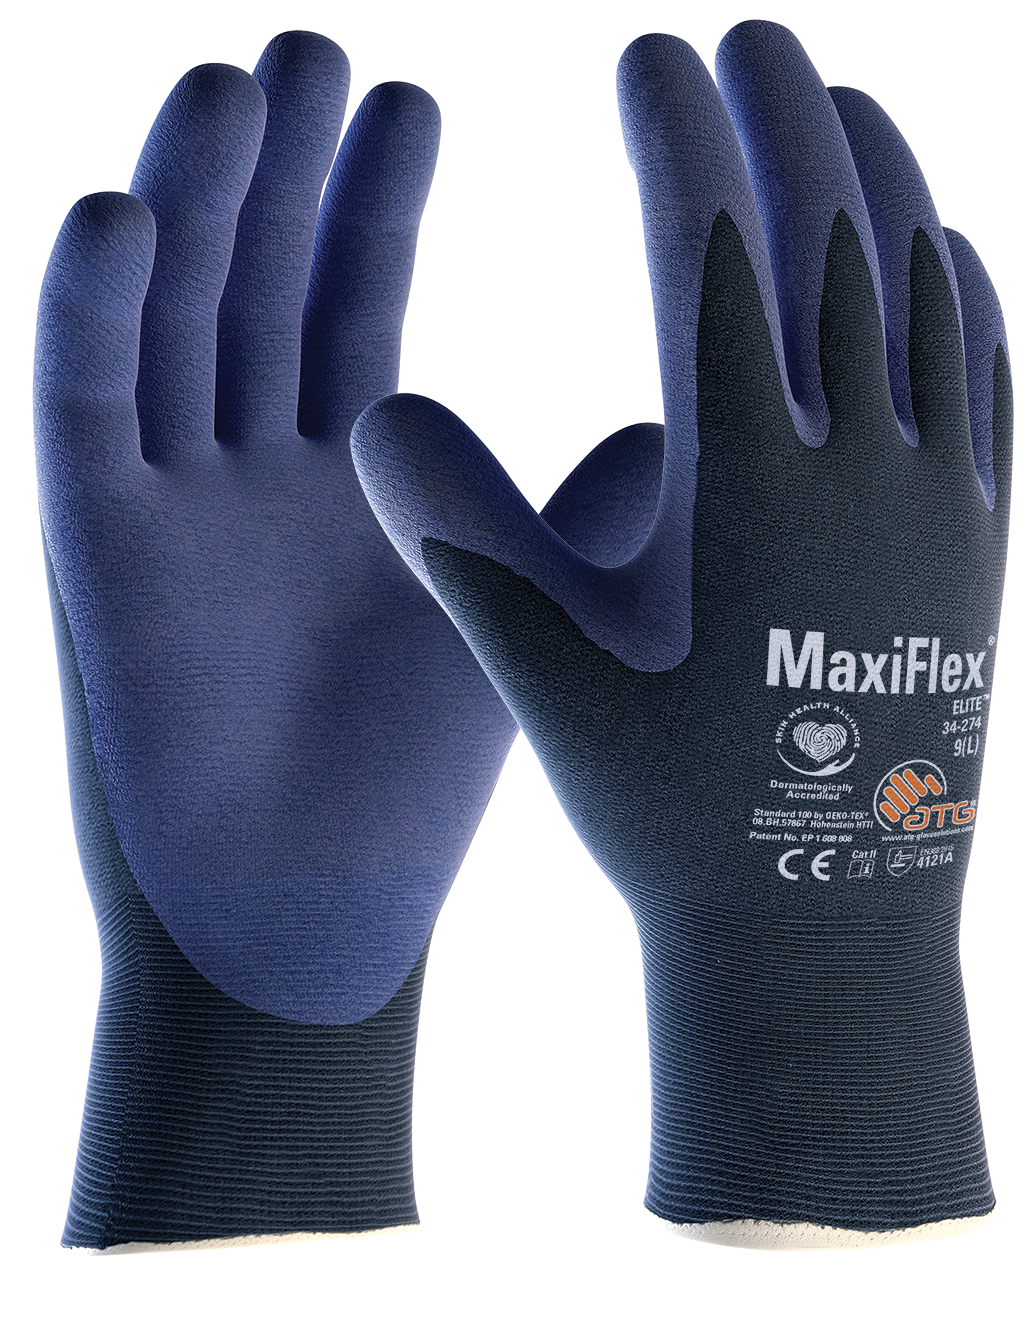 MaxiFlex® Elite™ Nylon-Strickhandschuhe '(34-274)', 12 